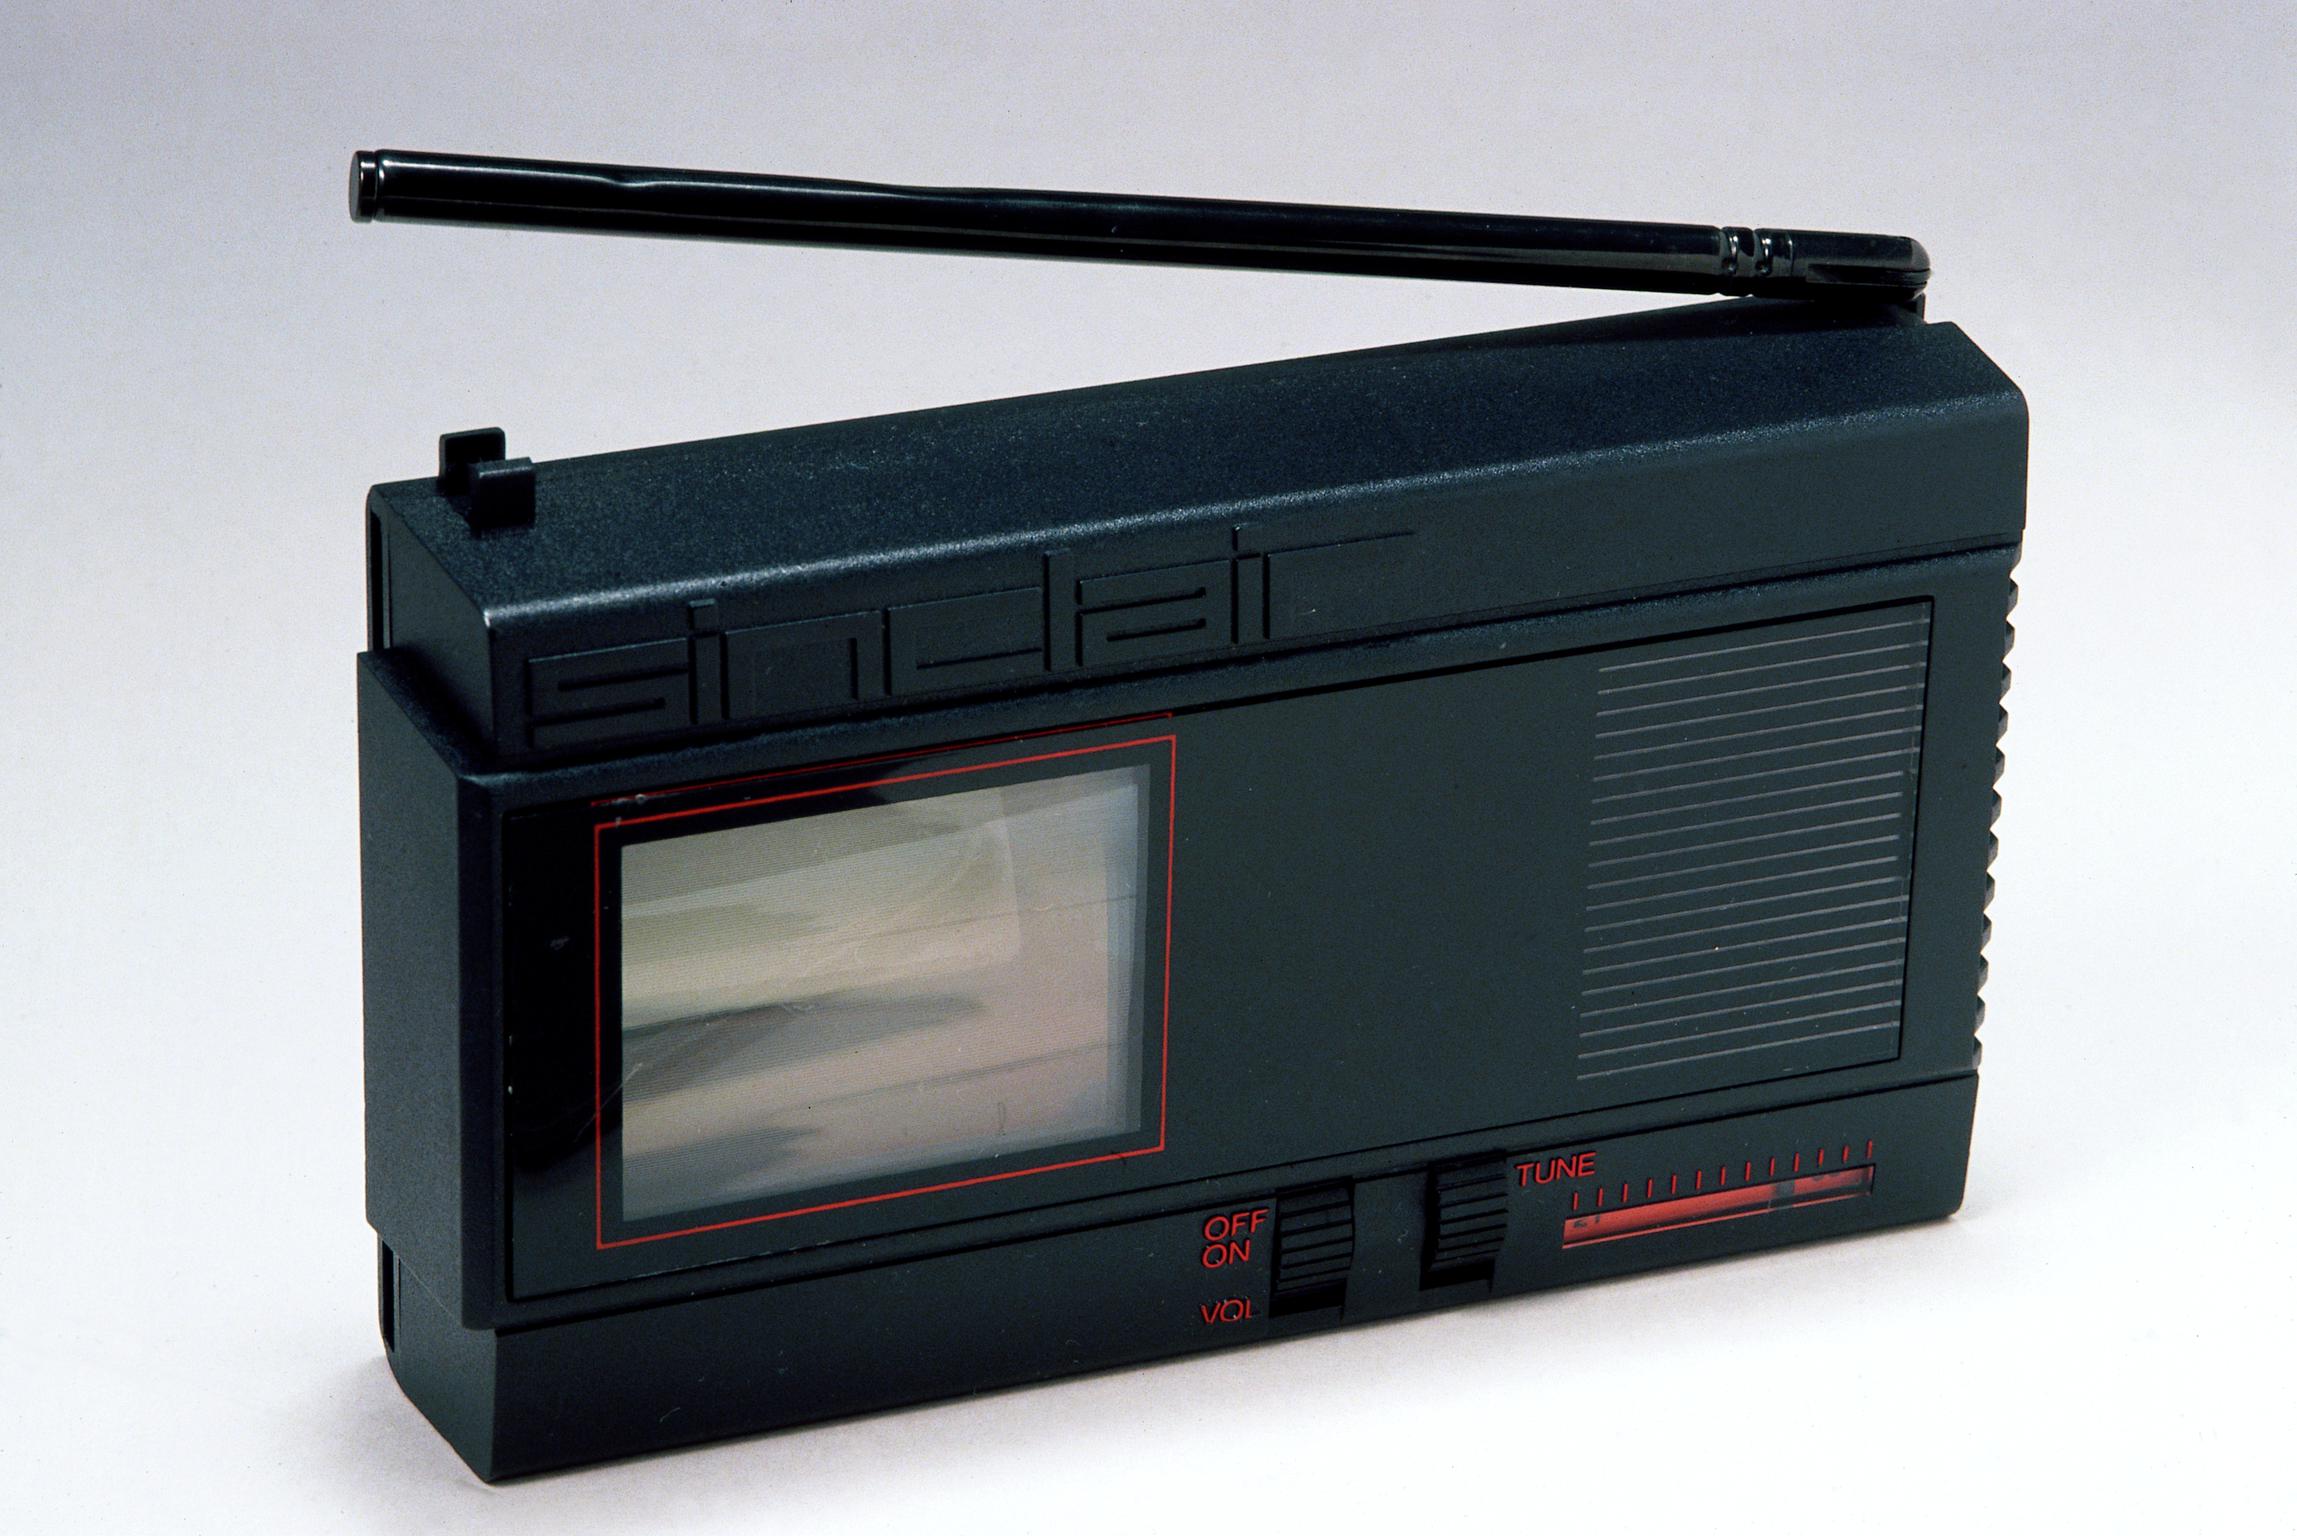 Sinclair FTV1 flat-screen pocket television